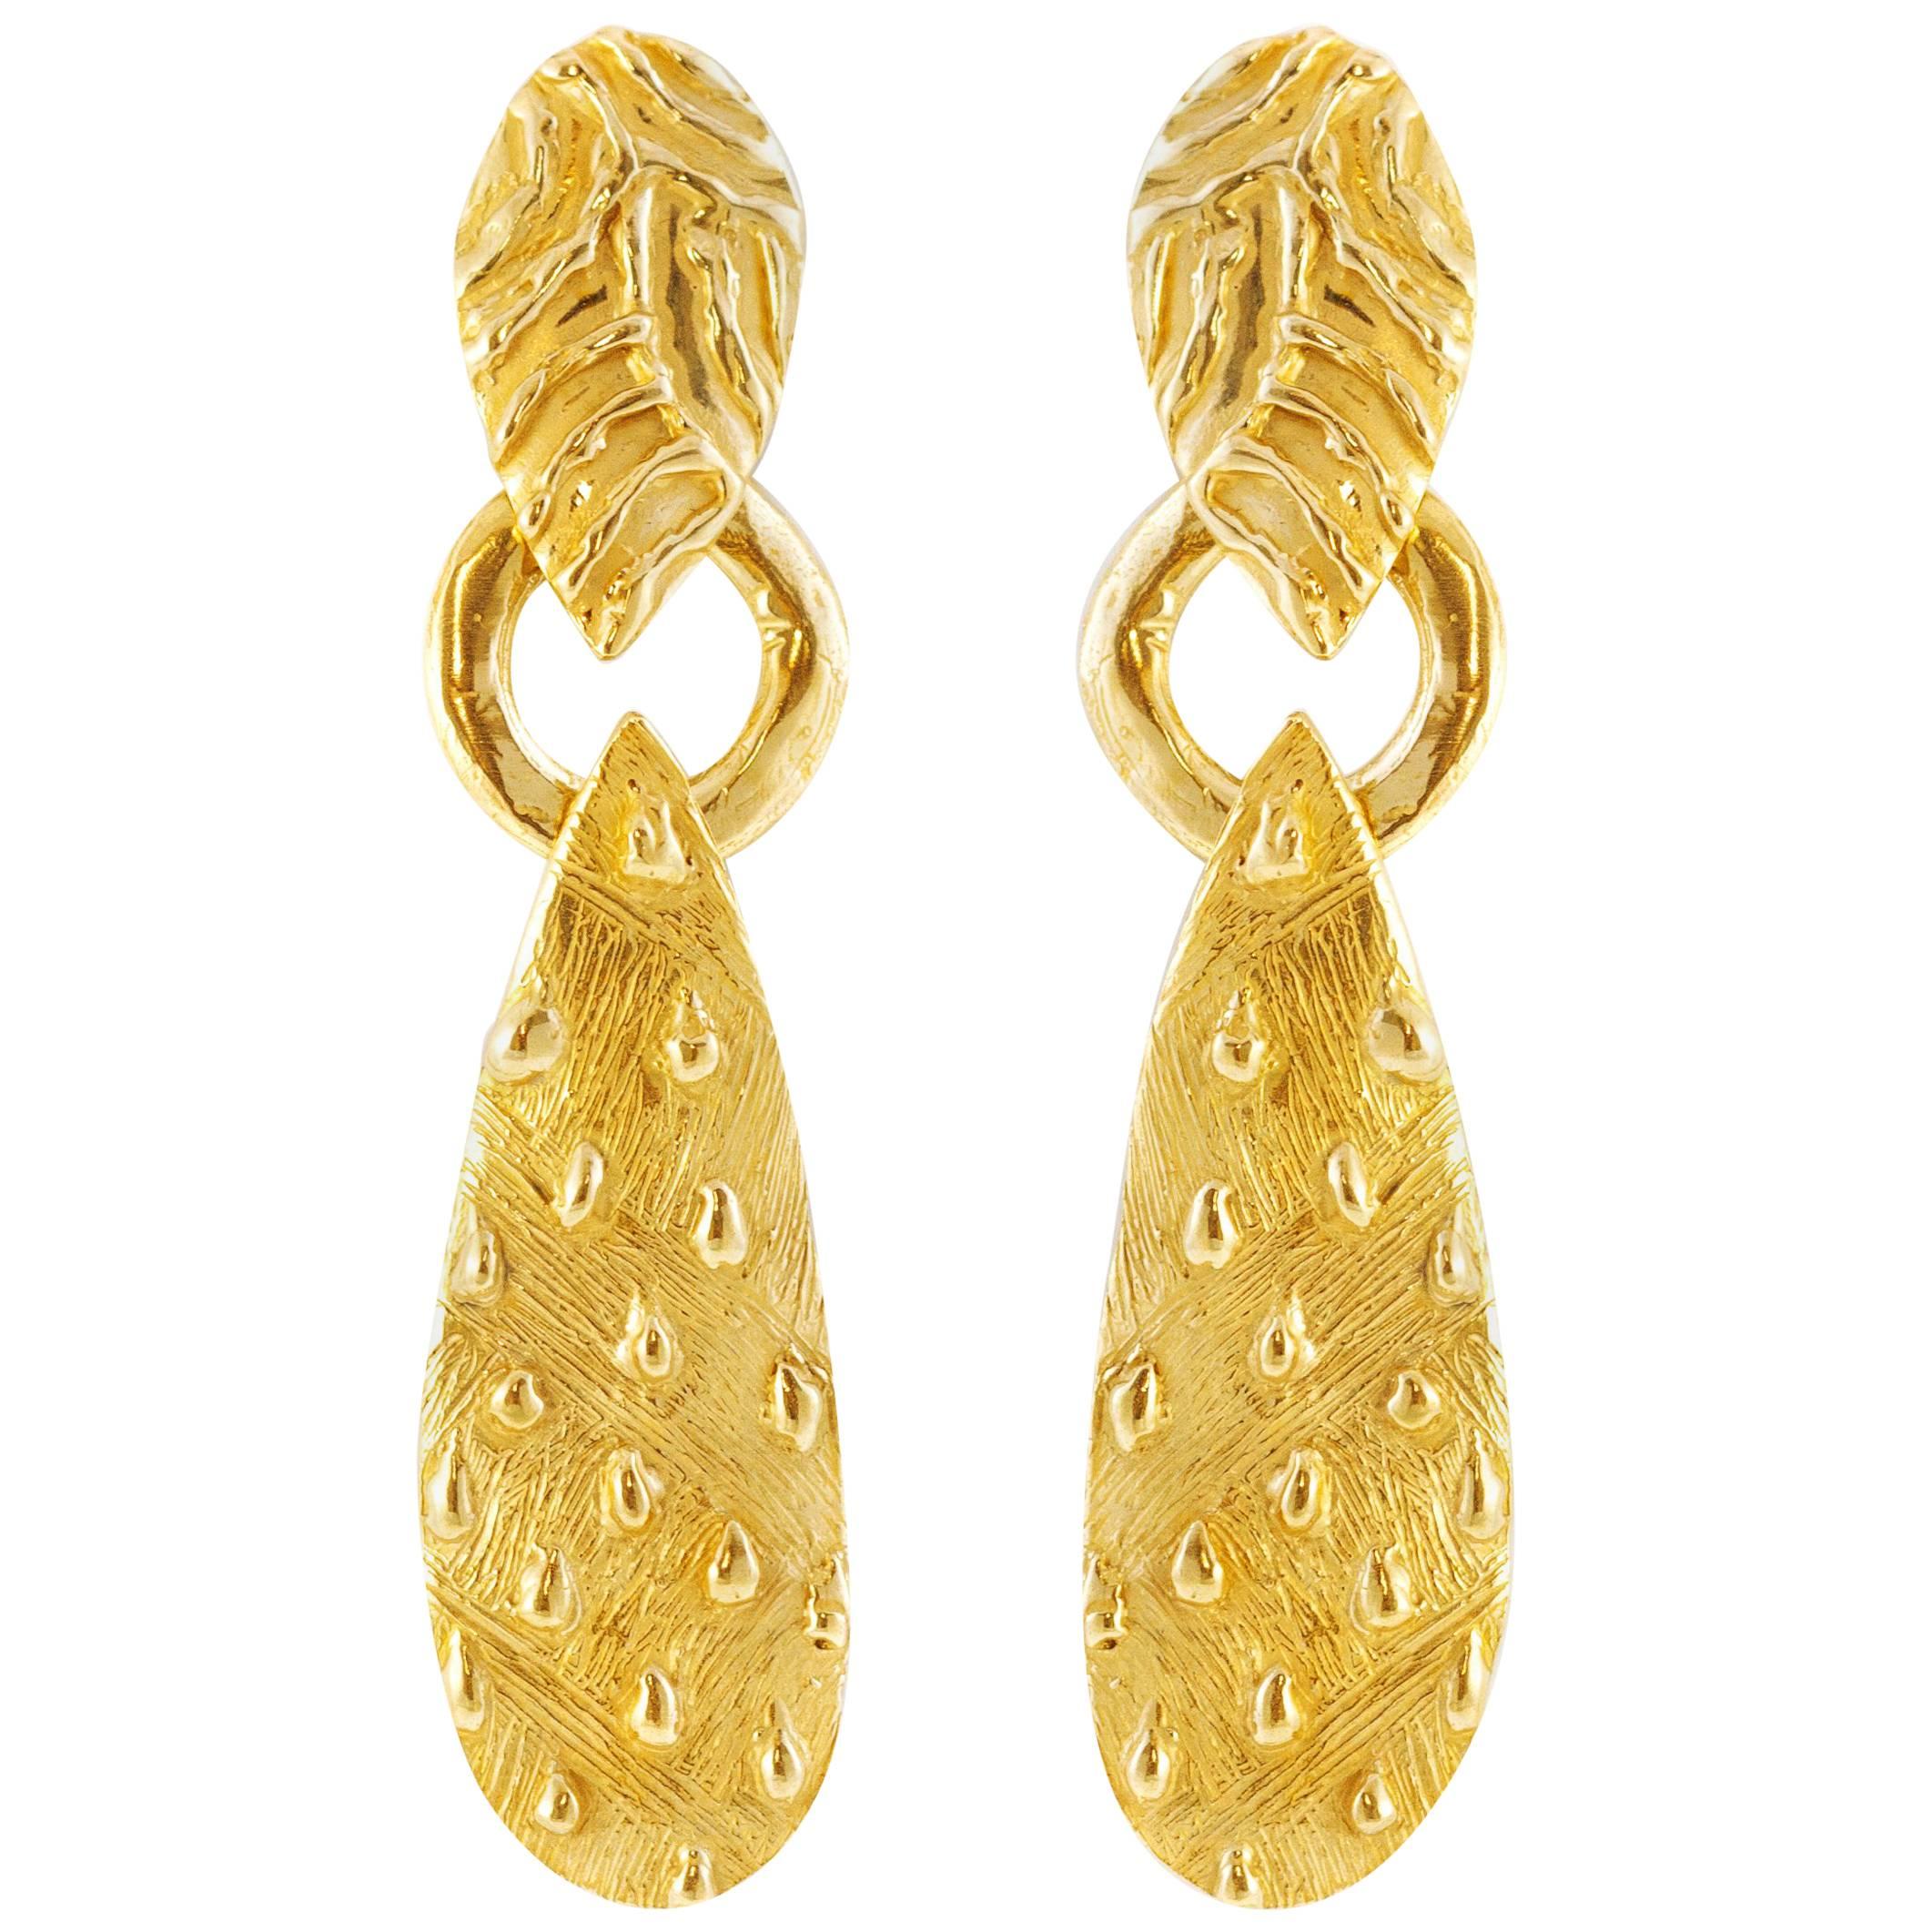 Giulia Barela Salento earrings, gold plated bronze For Sale